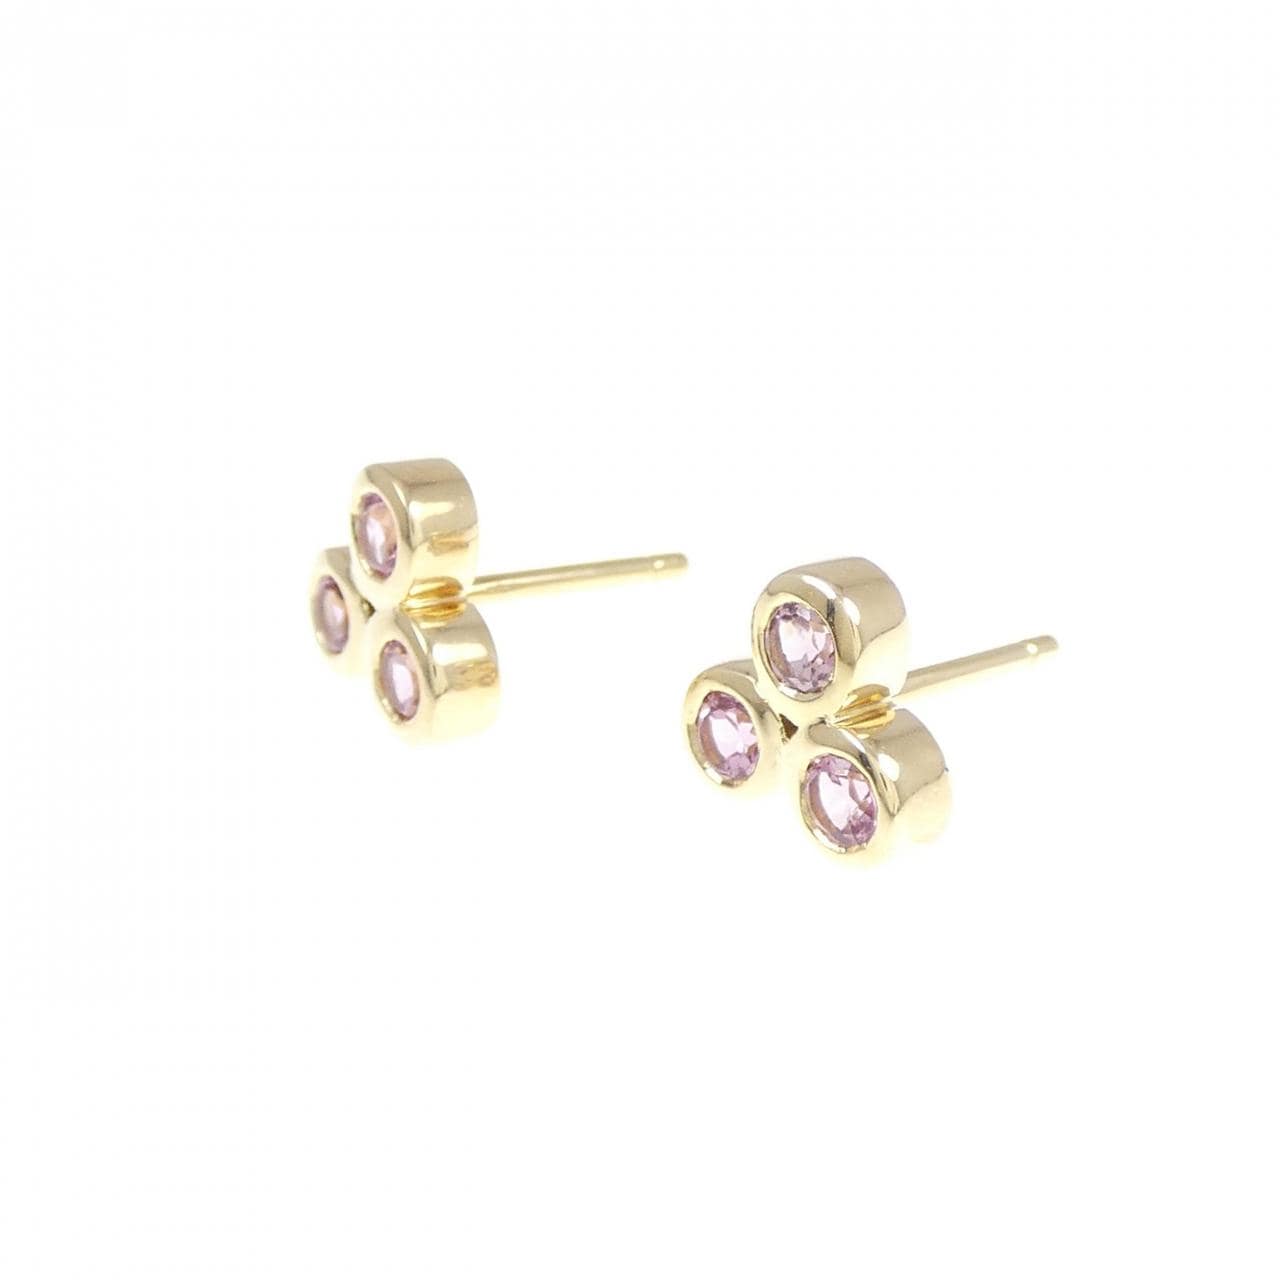 750YG/K18YG Tourmaline earrings